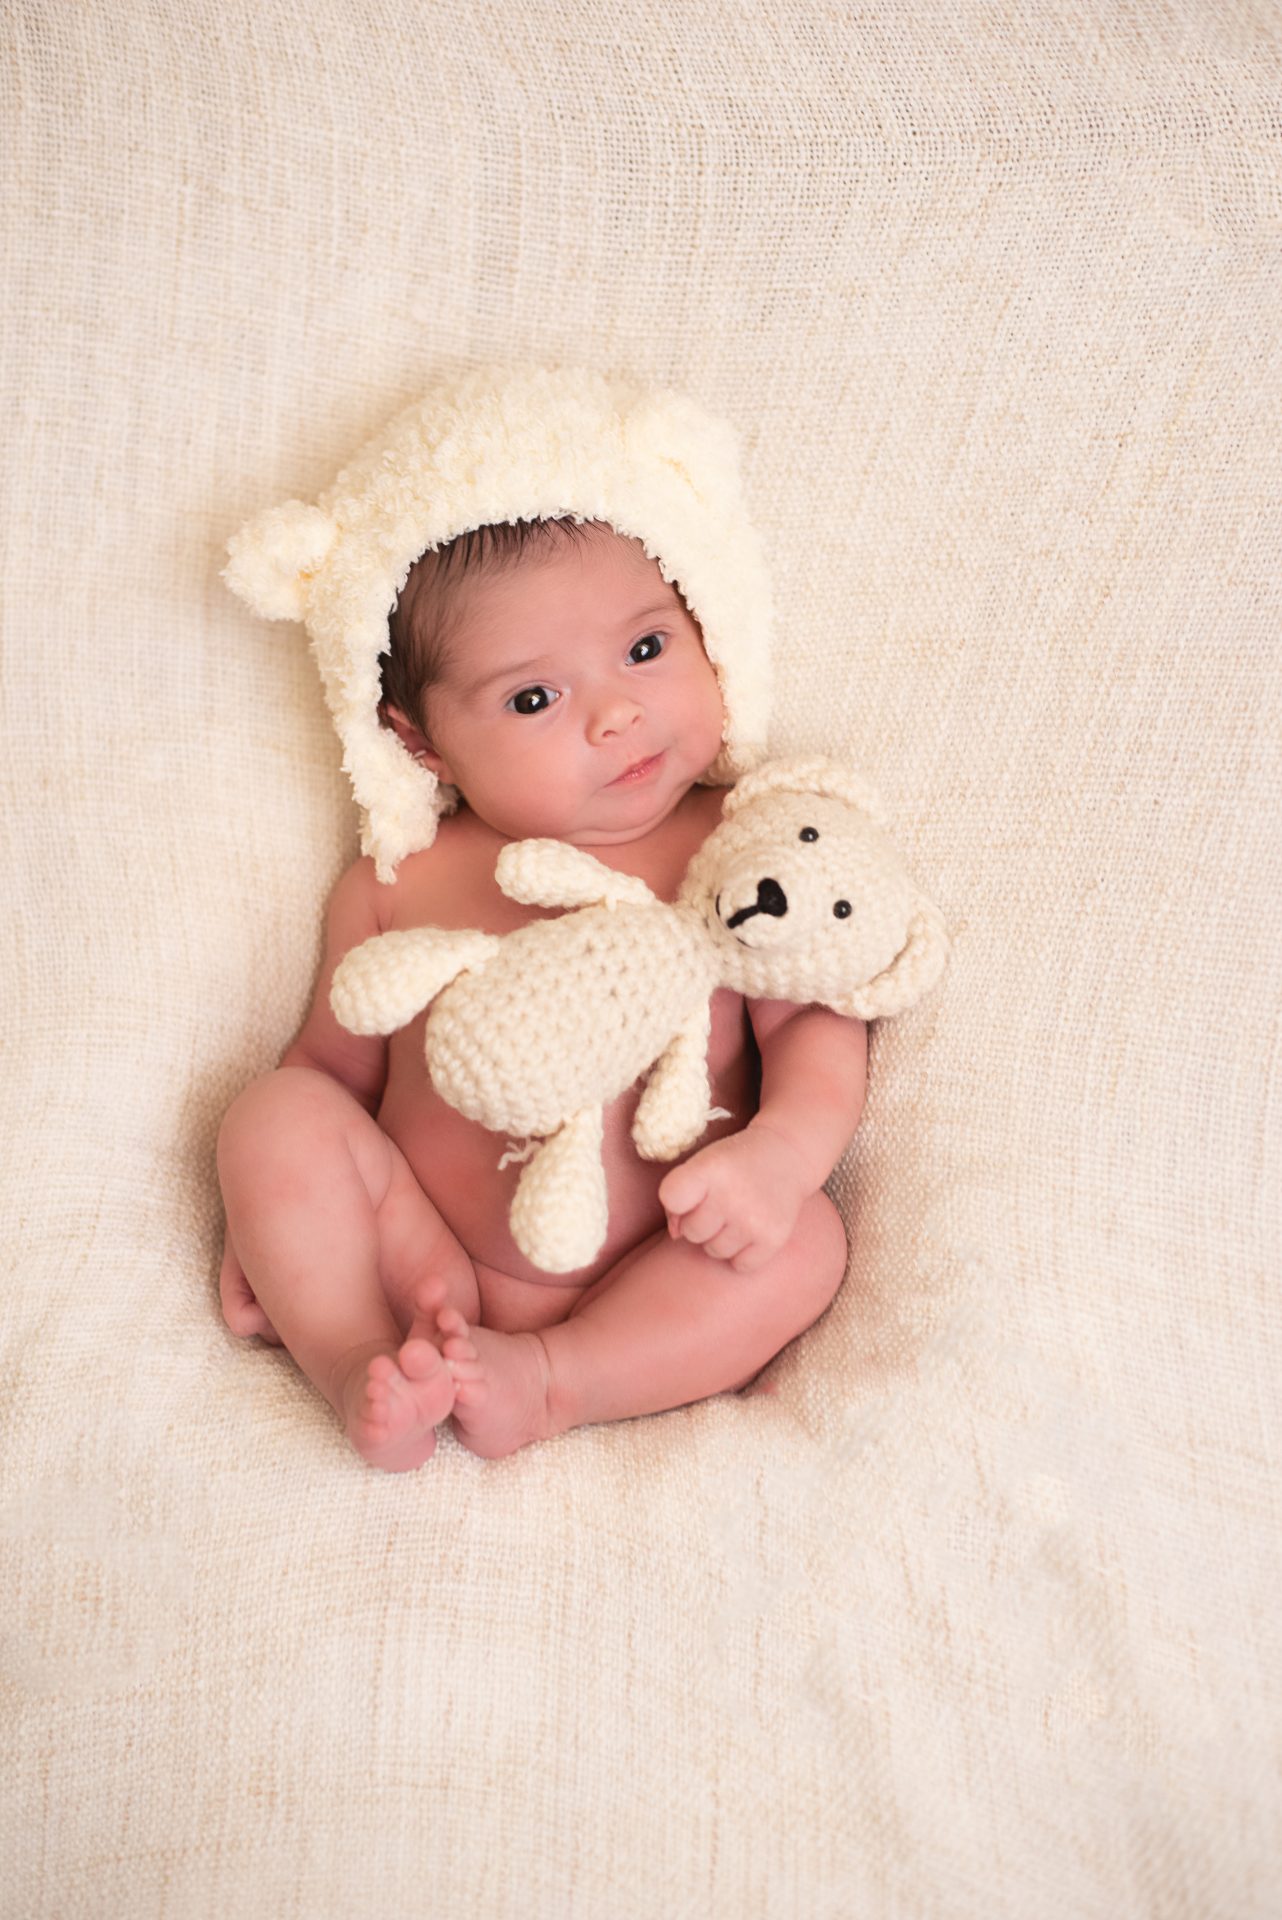 Newborn girl in cream bear bonnet with small stuffed bear | san diego baby photography | Visit www.babiesandbeauties.com